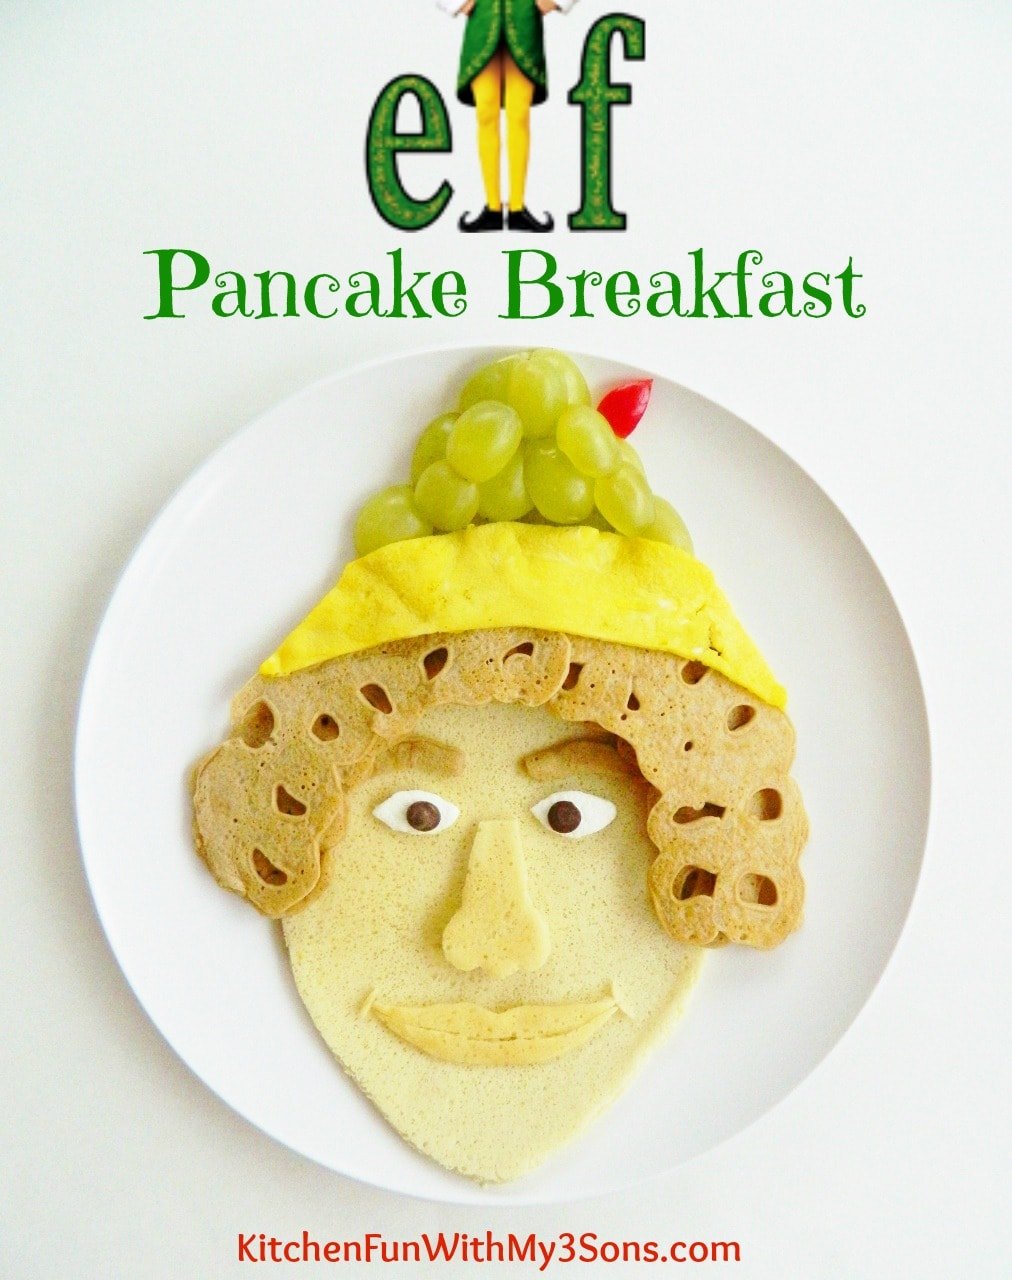 Buddy the Elf Pancakes